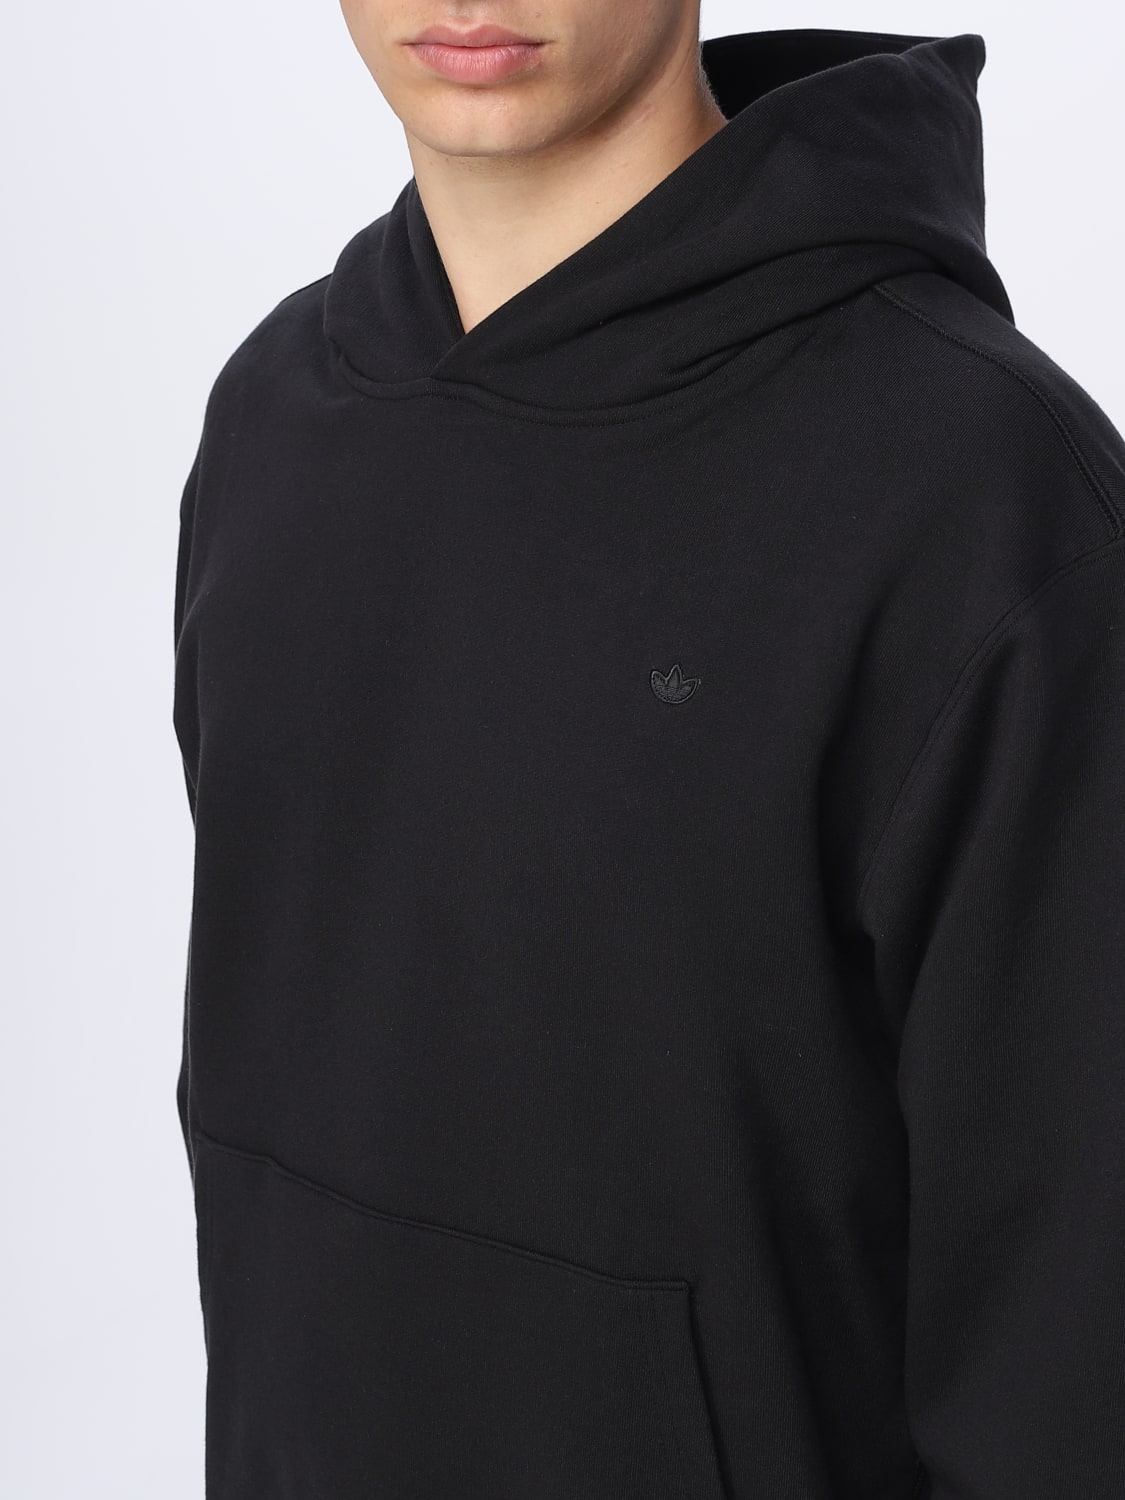 | at cotton sweatshirt - HK2937 ORIGINALS: in sweatshirt Black online Adidas ADIDAS Originals